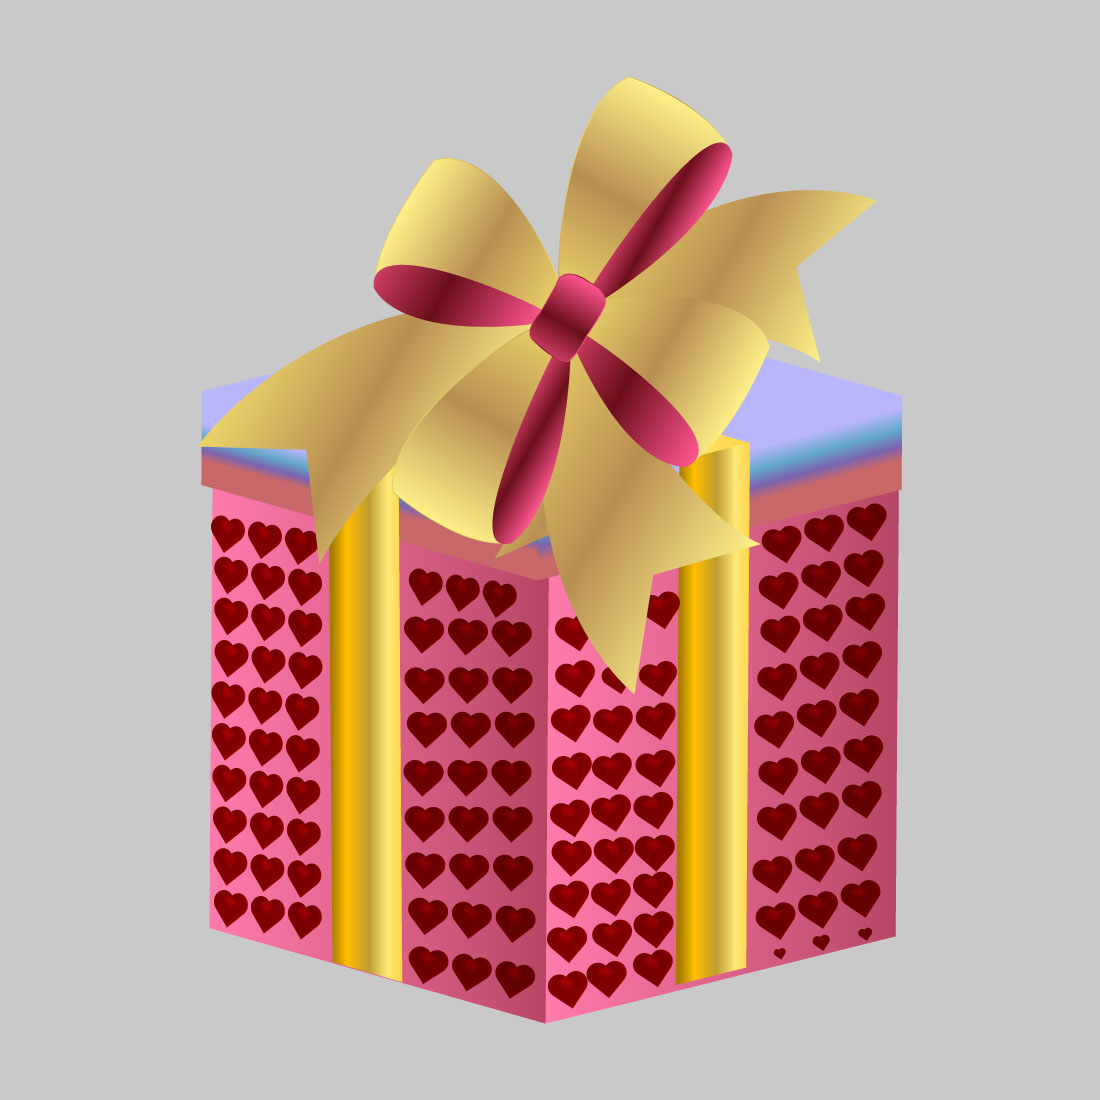 Valentine gift box & love heart illustration preview image.